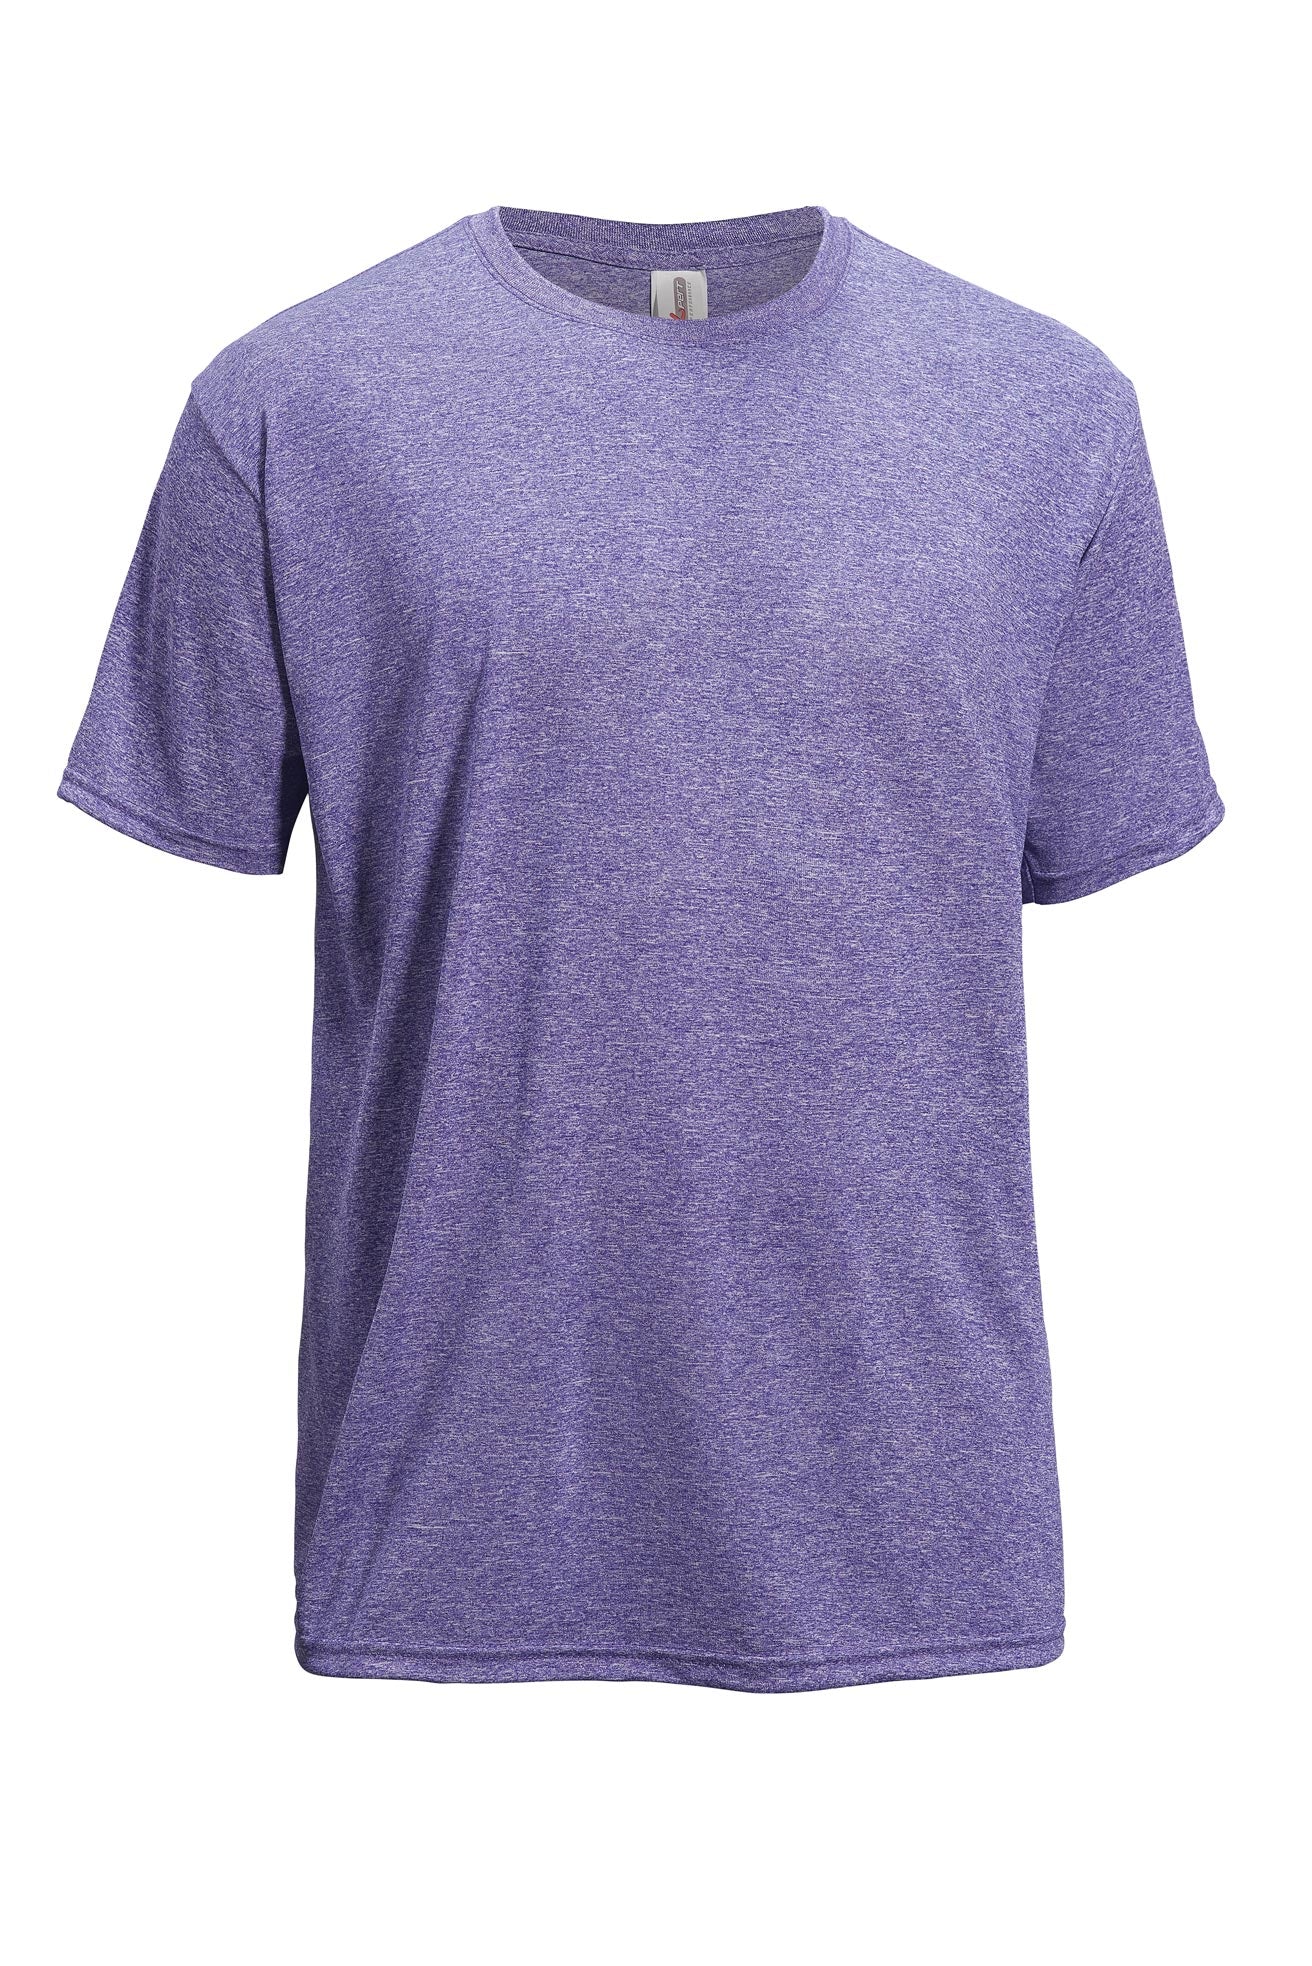 Expert Brand Retail Active Heather Tee in Purple 2#color_heather-purple